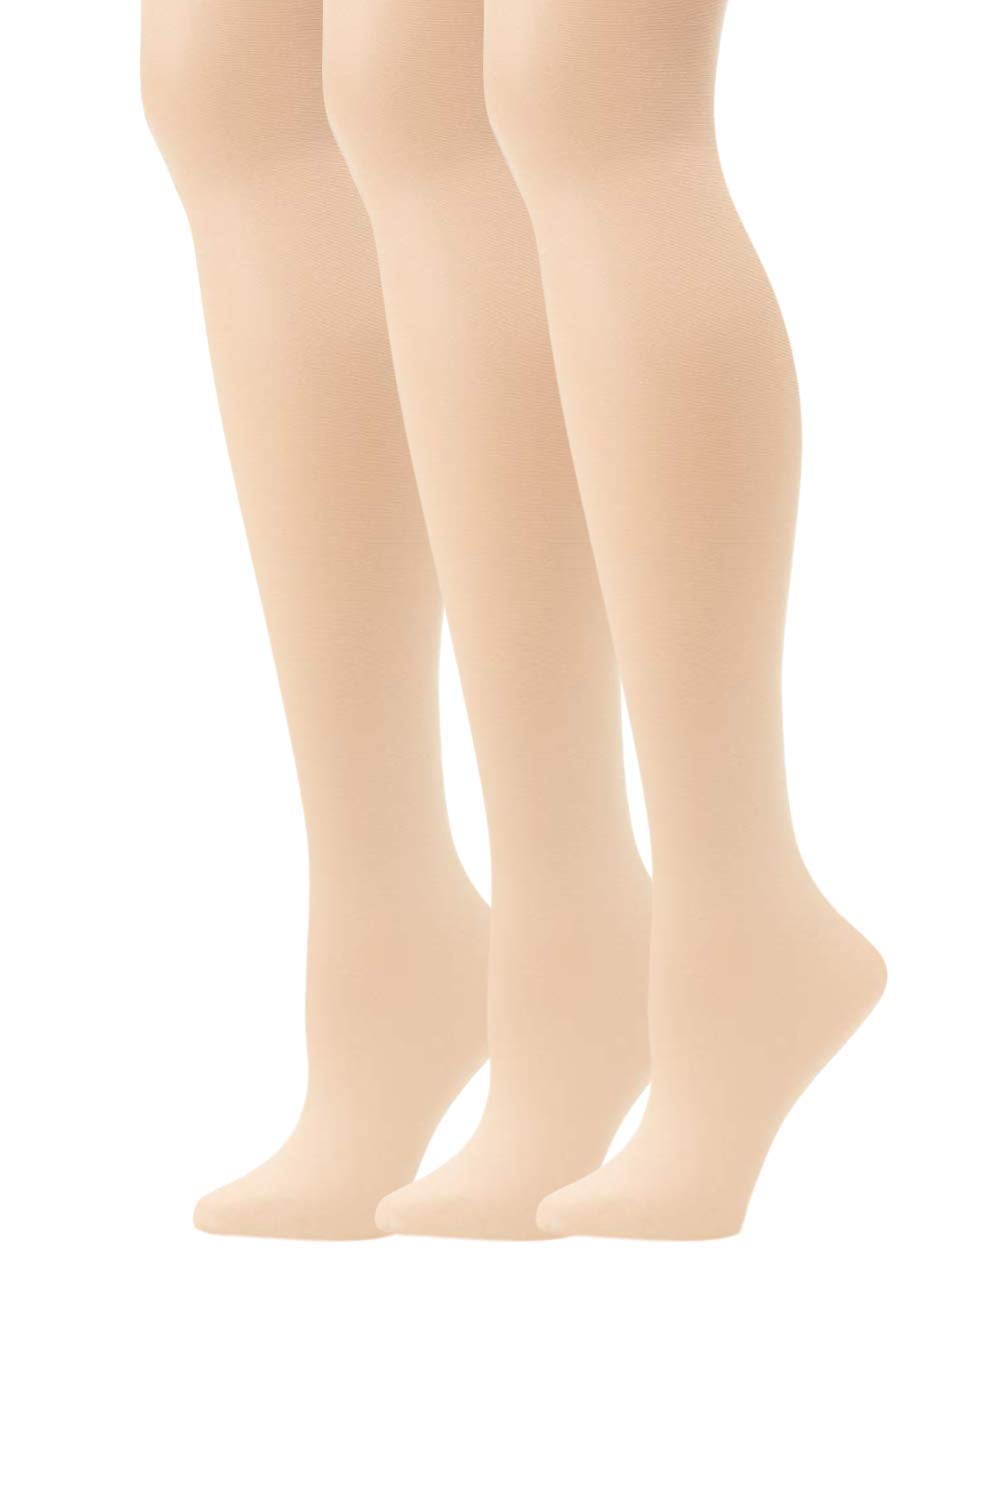 Hanes Silk Reflections Plus Sheer Control Top Enhanced Toe Pantyhose Soft  Taupe 1PLUS Women's 